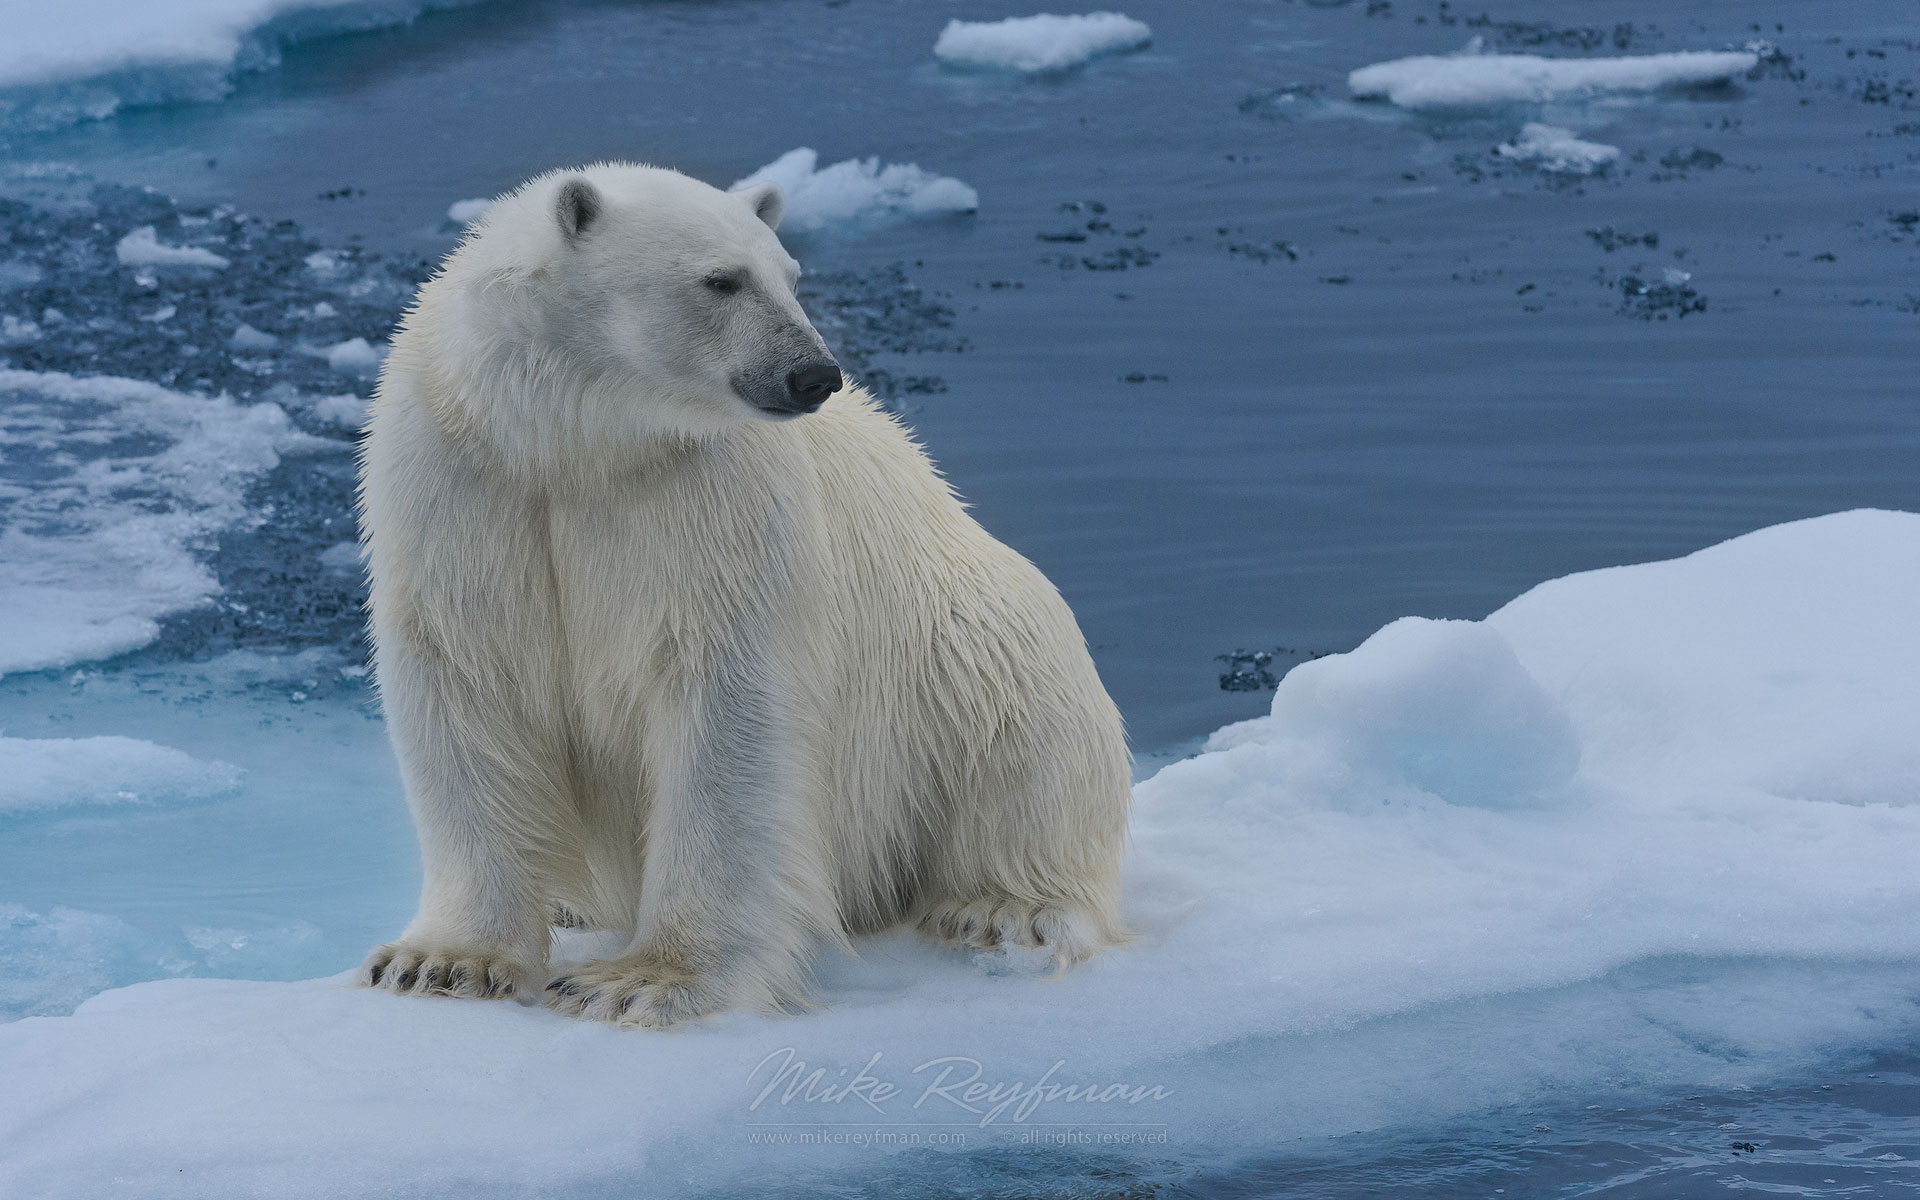 Polar bear resting on an ice floe in Svalbard, Norway. 81st parallel North. - Polar-Bears-Svalbard-Spitsbergen-Norway - Mike Reyfman Photography